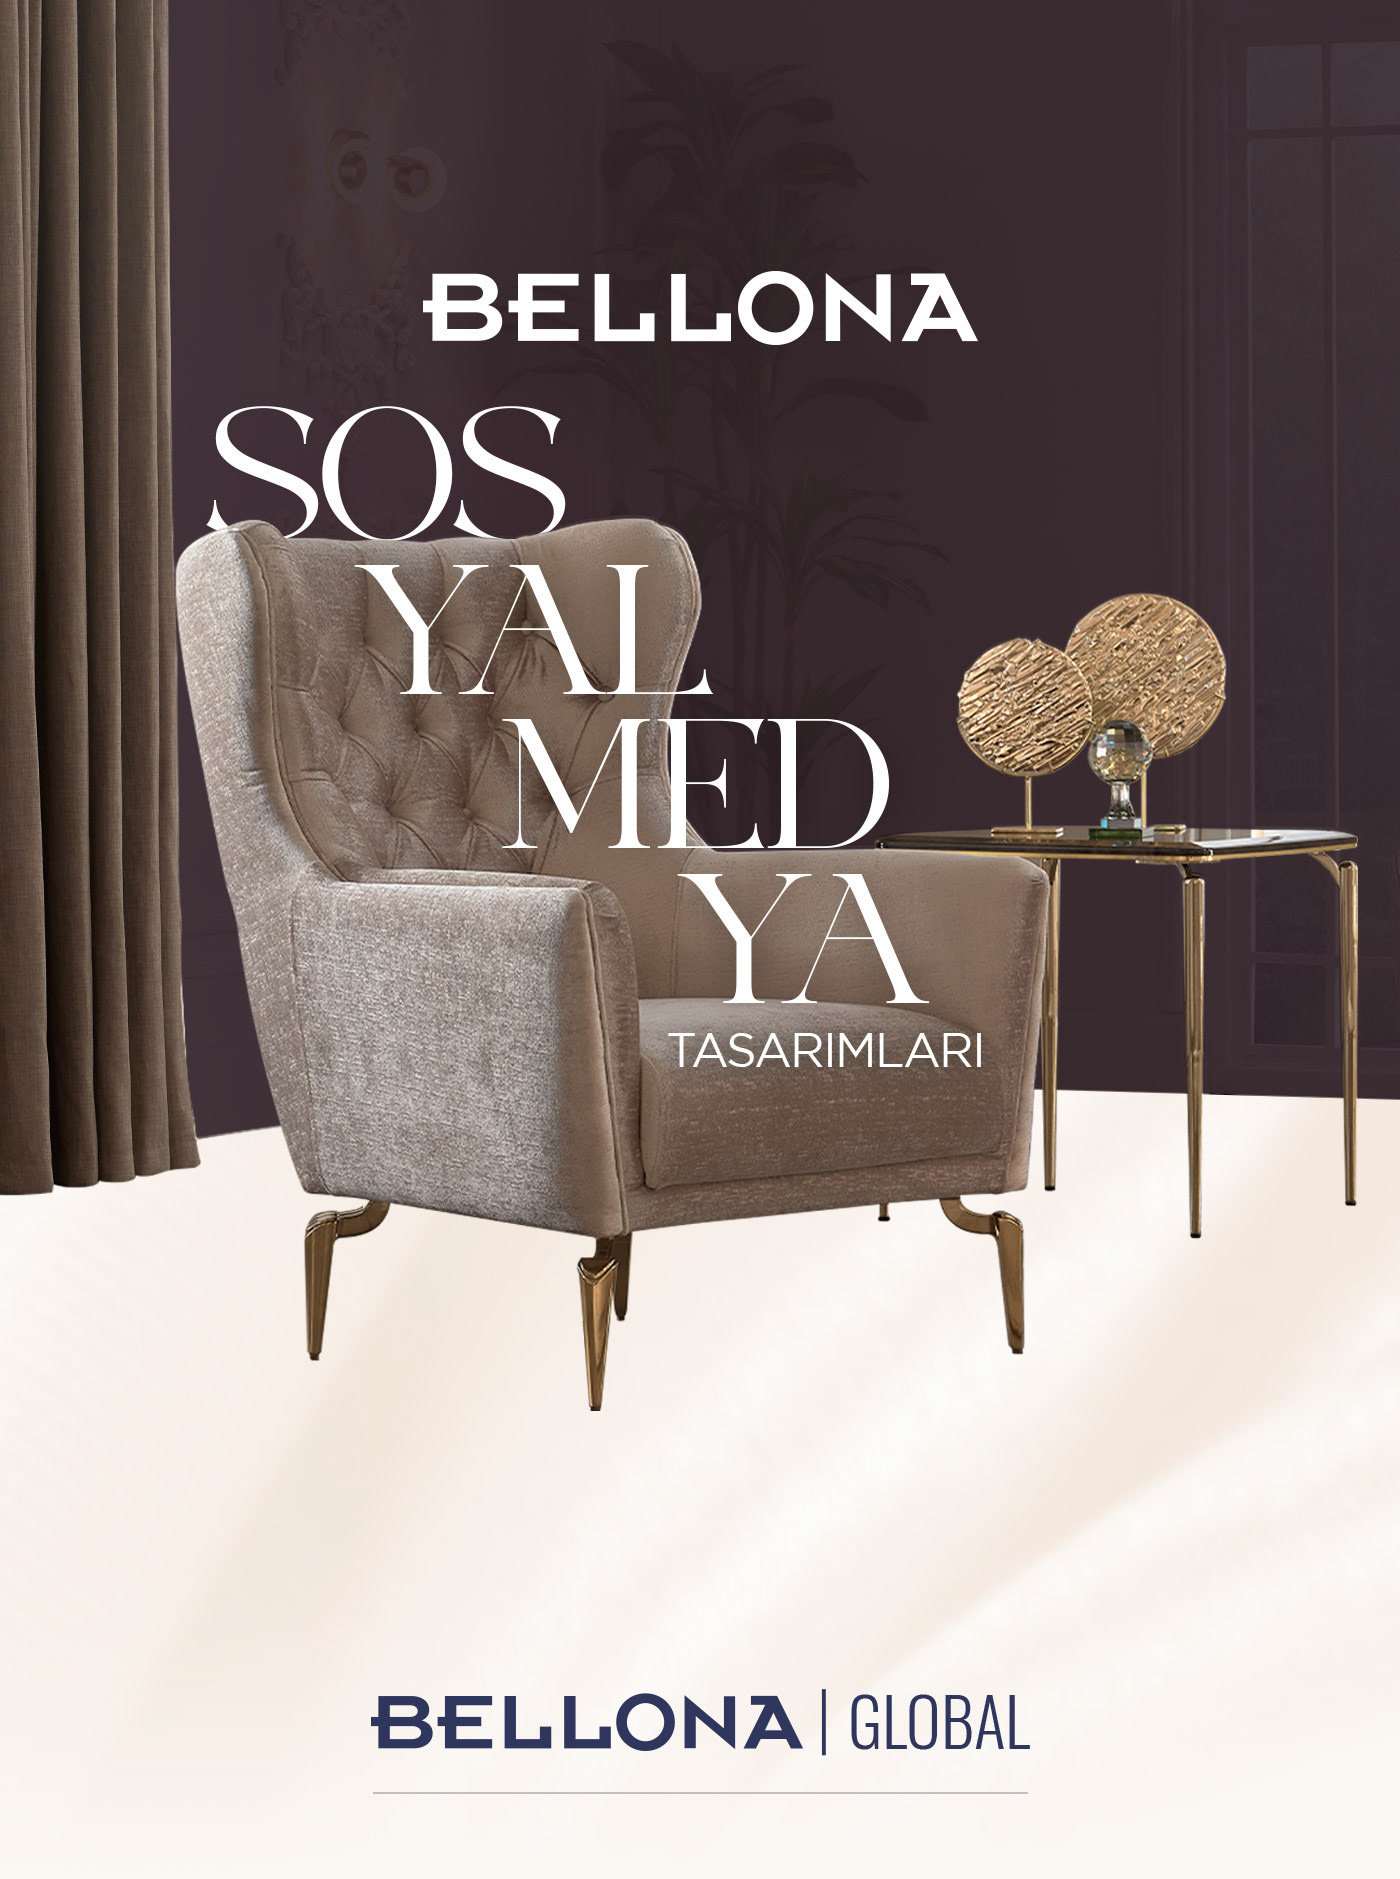 bellona sosyal medya social media furniture mobilya instagram Social Media Design design table armchair